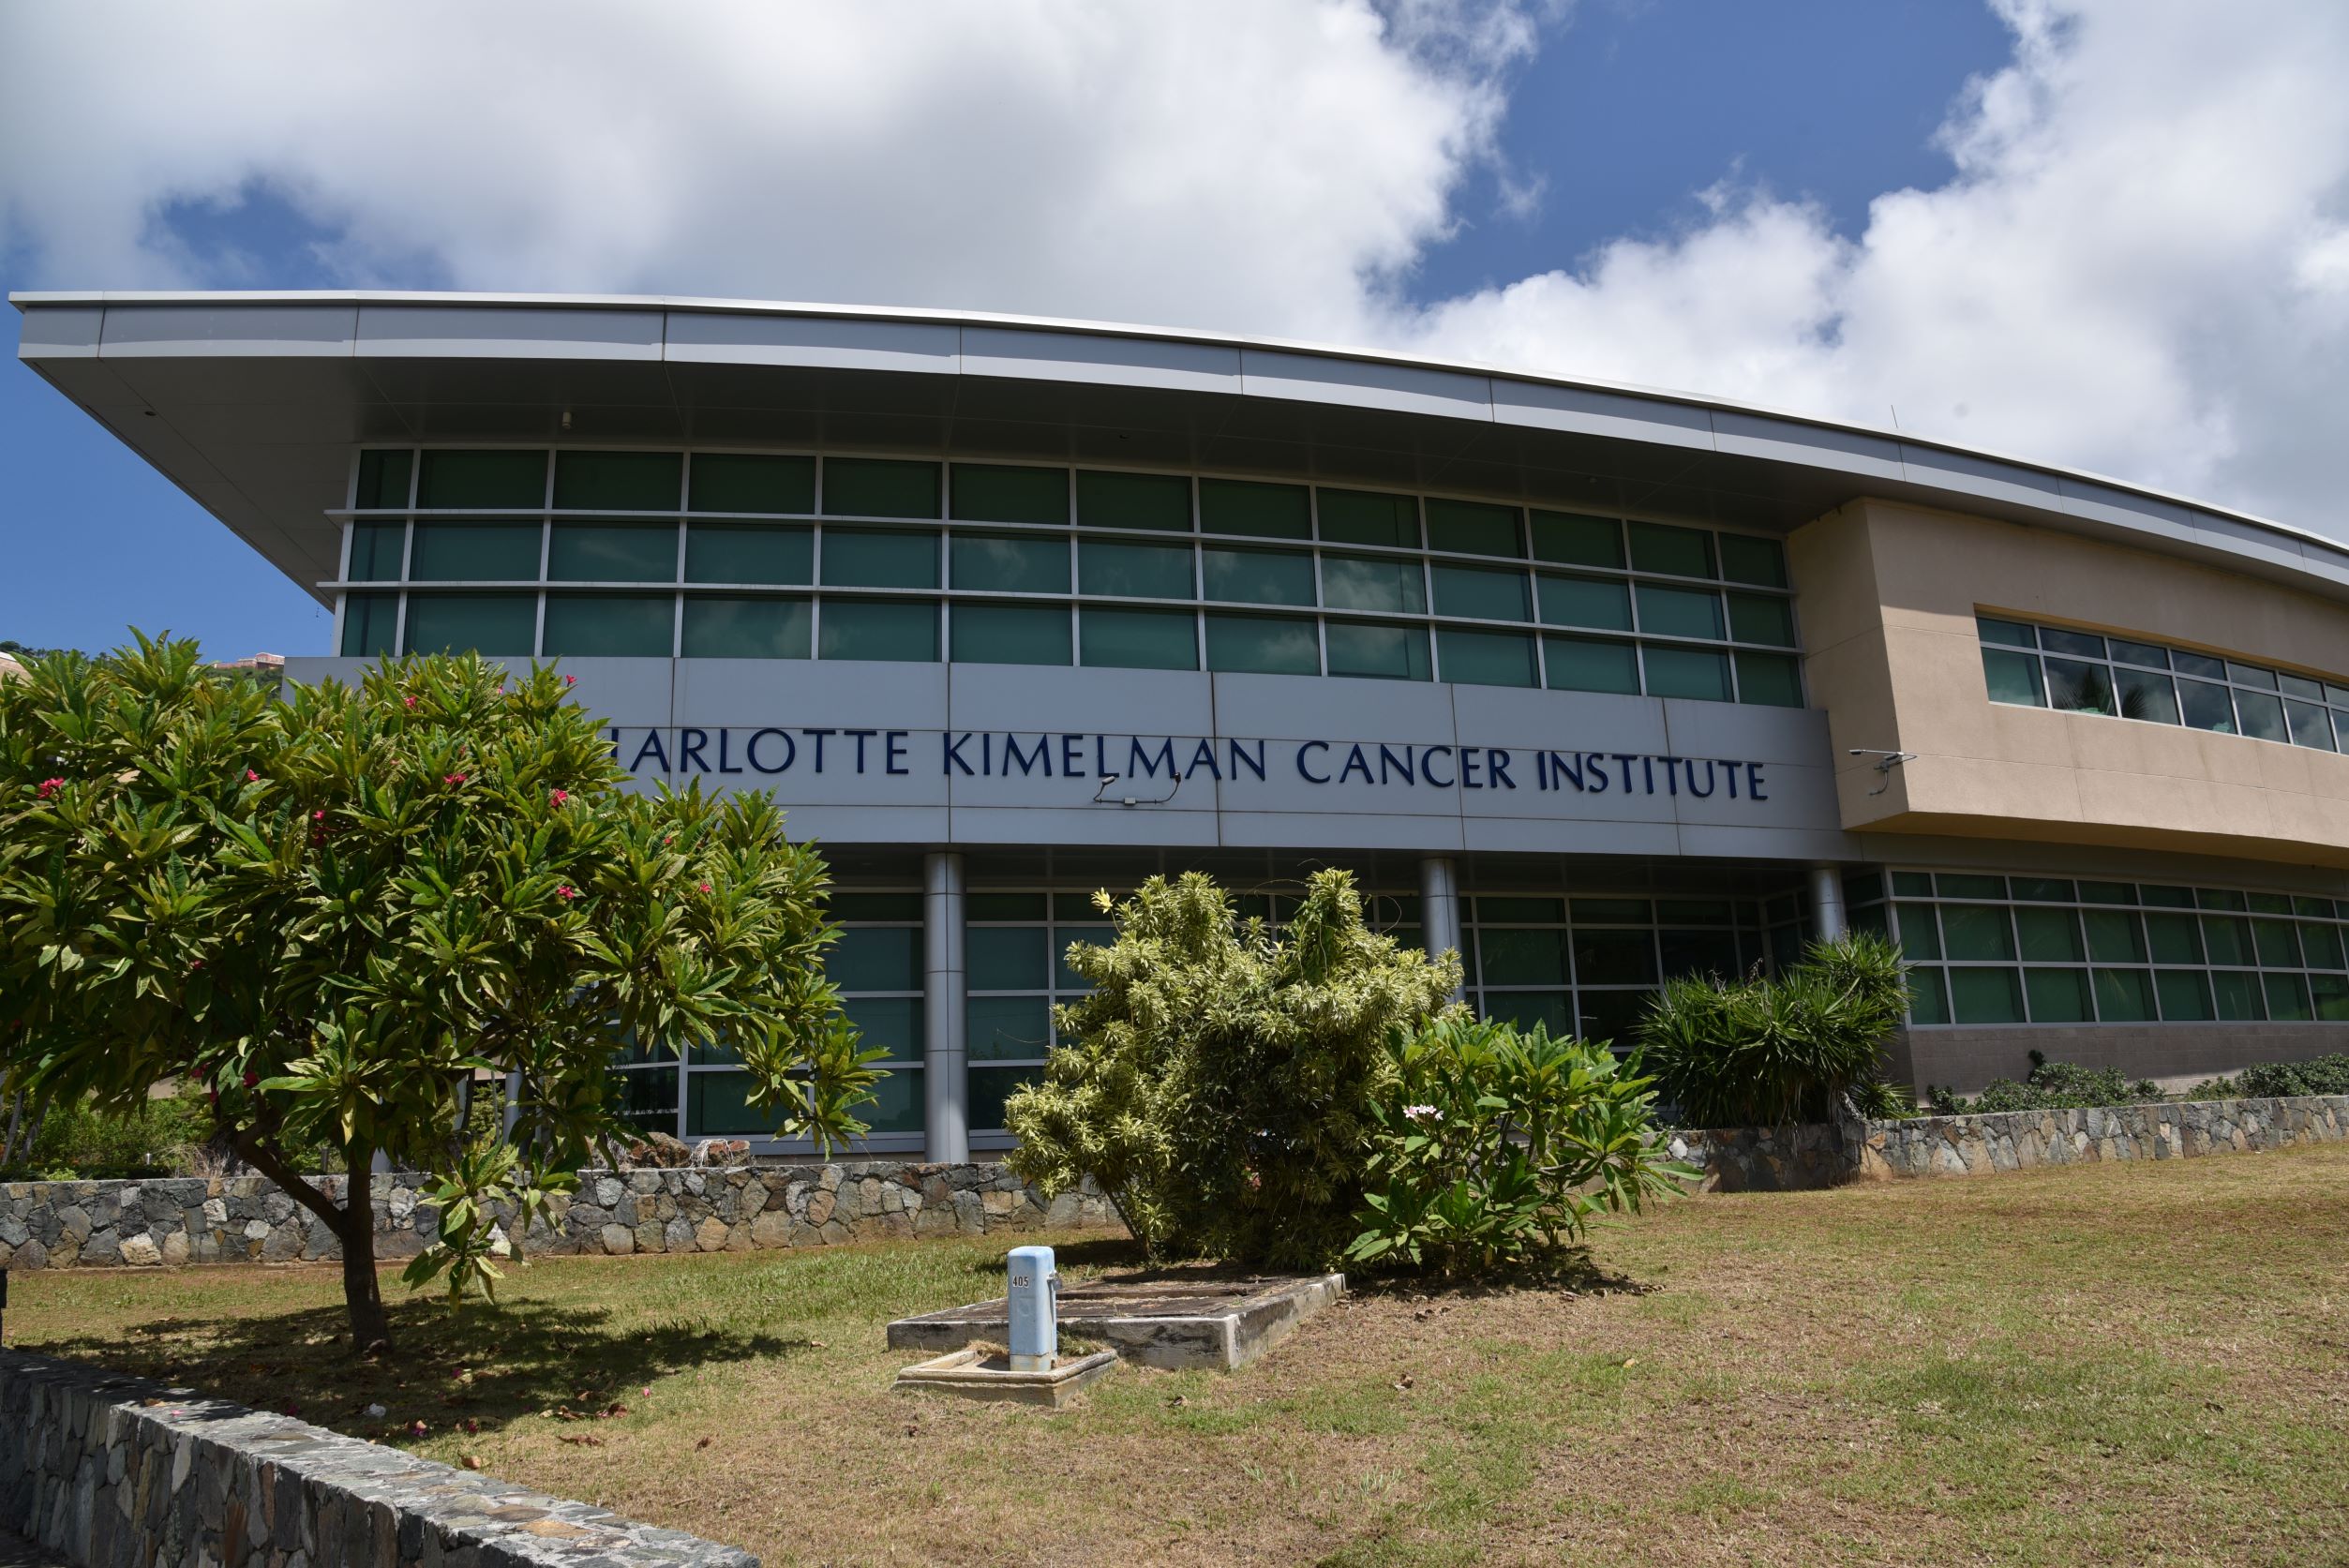 USVI Gets $50M for the Restoration of the Charlotte Kimelman Cancer Institute